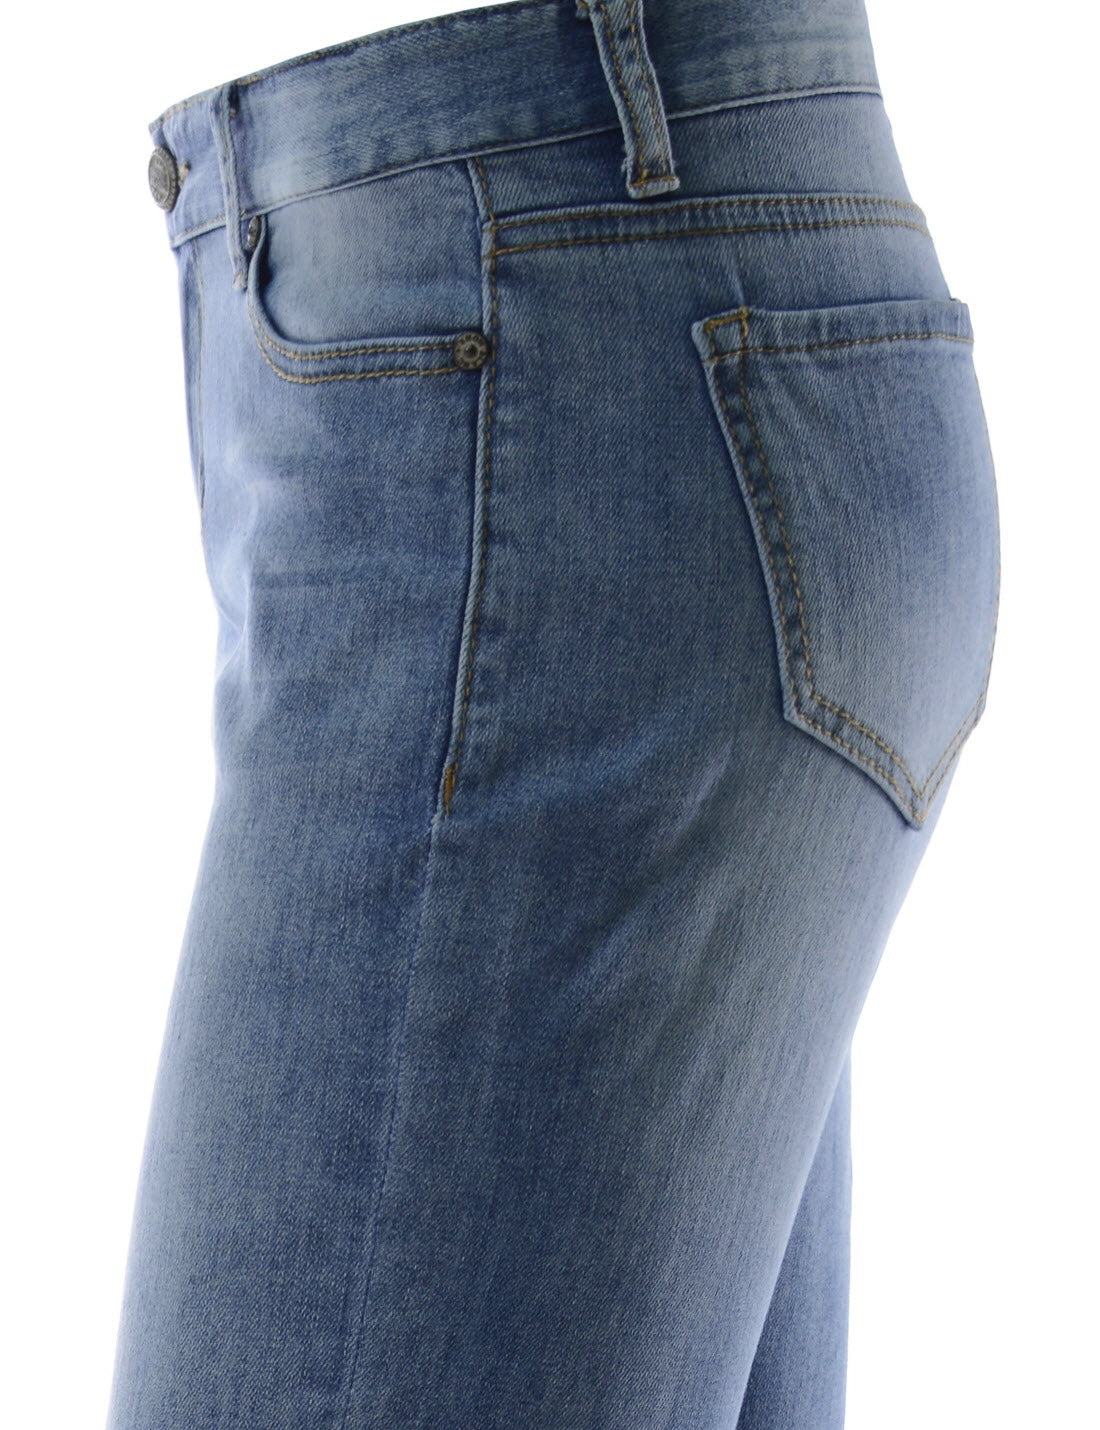 Light Blue Washed Skinny Jeans Stretch Denim Pants